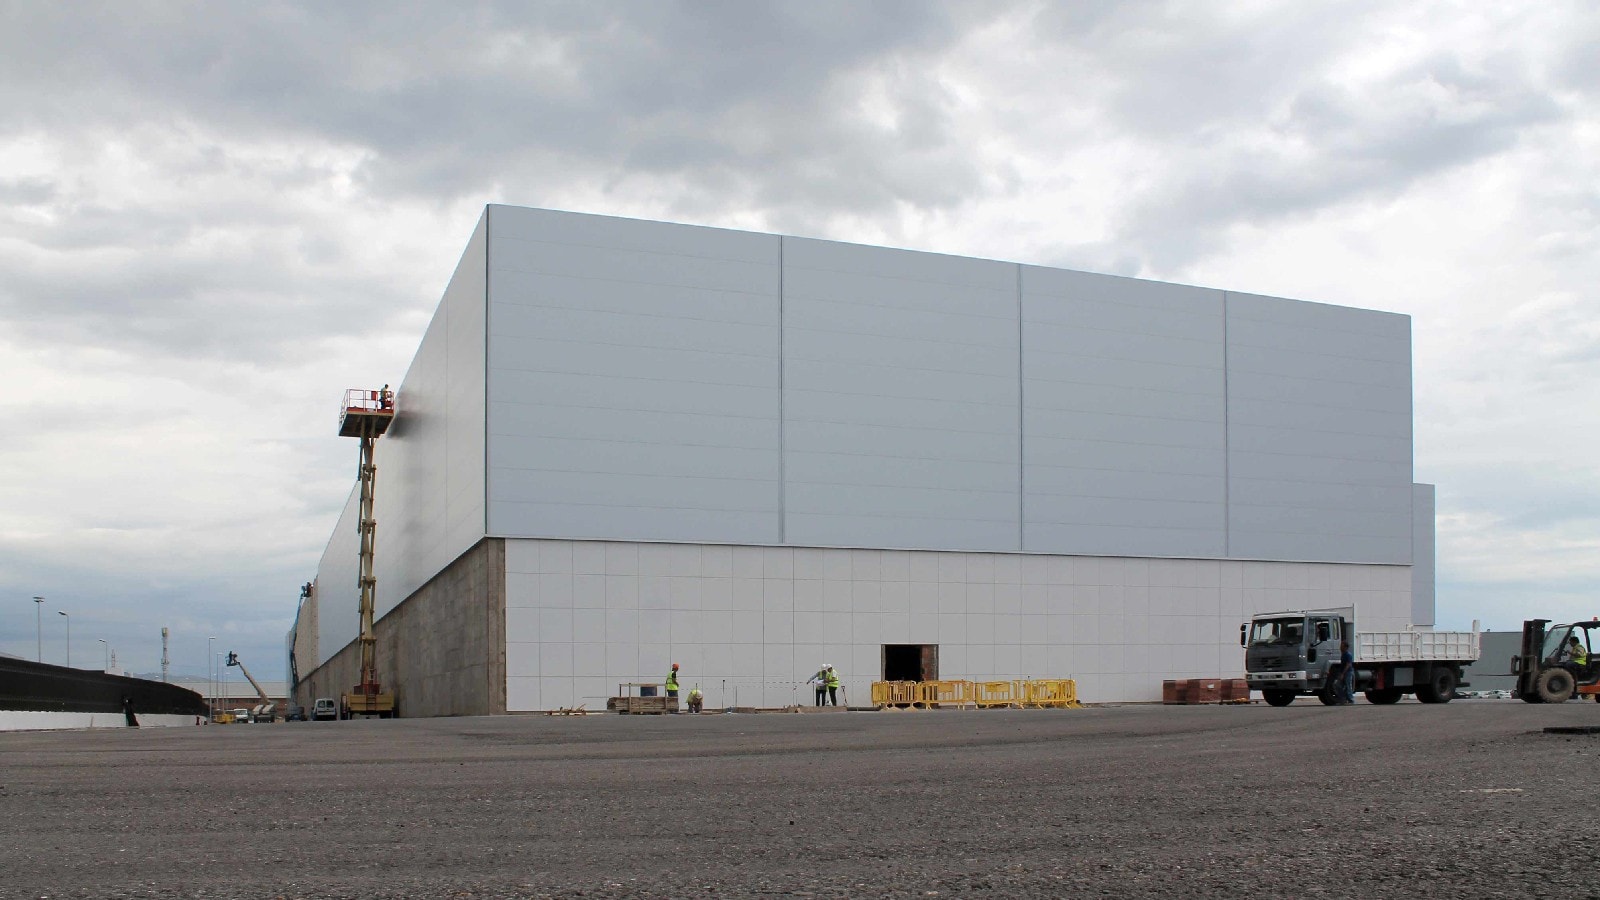 Gamadecor makes its logistics warehouse even bigger